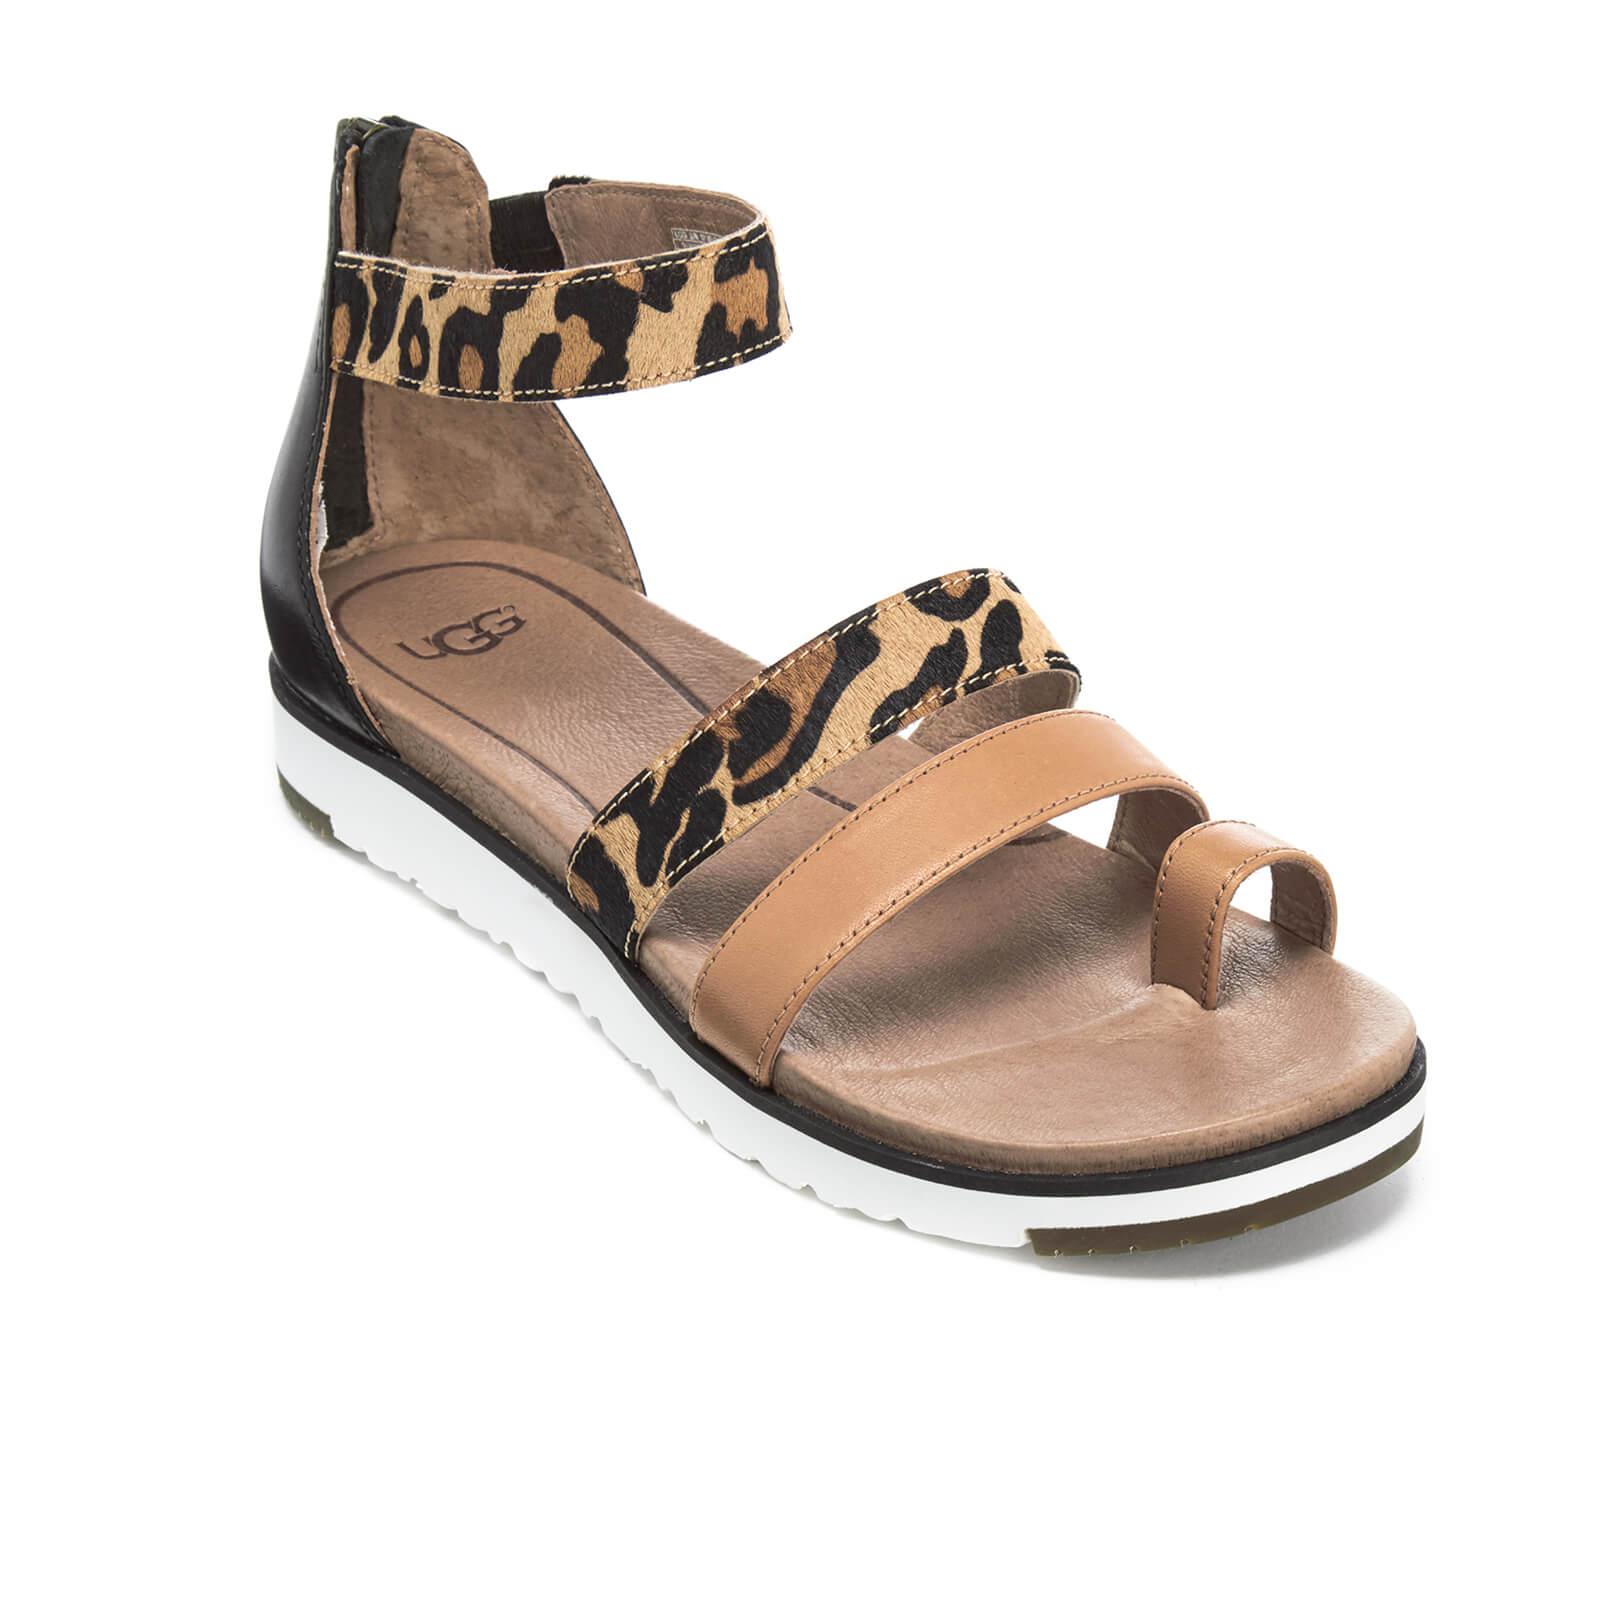 UGG Women's Mina Leopard Leather Gladiator Sandals - Lyst